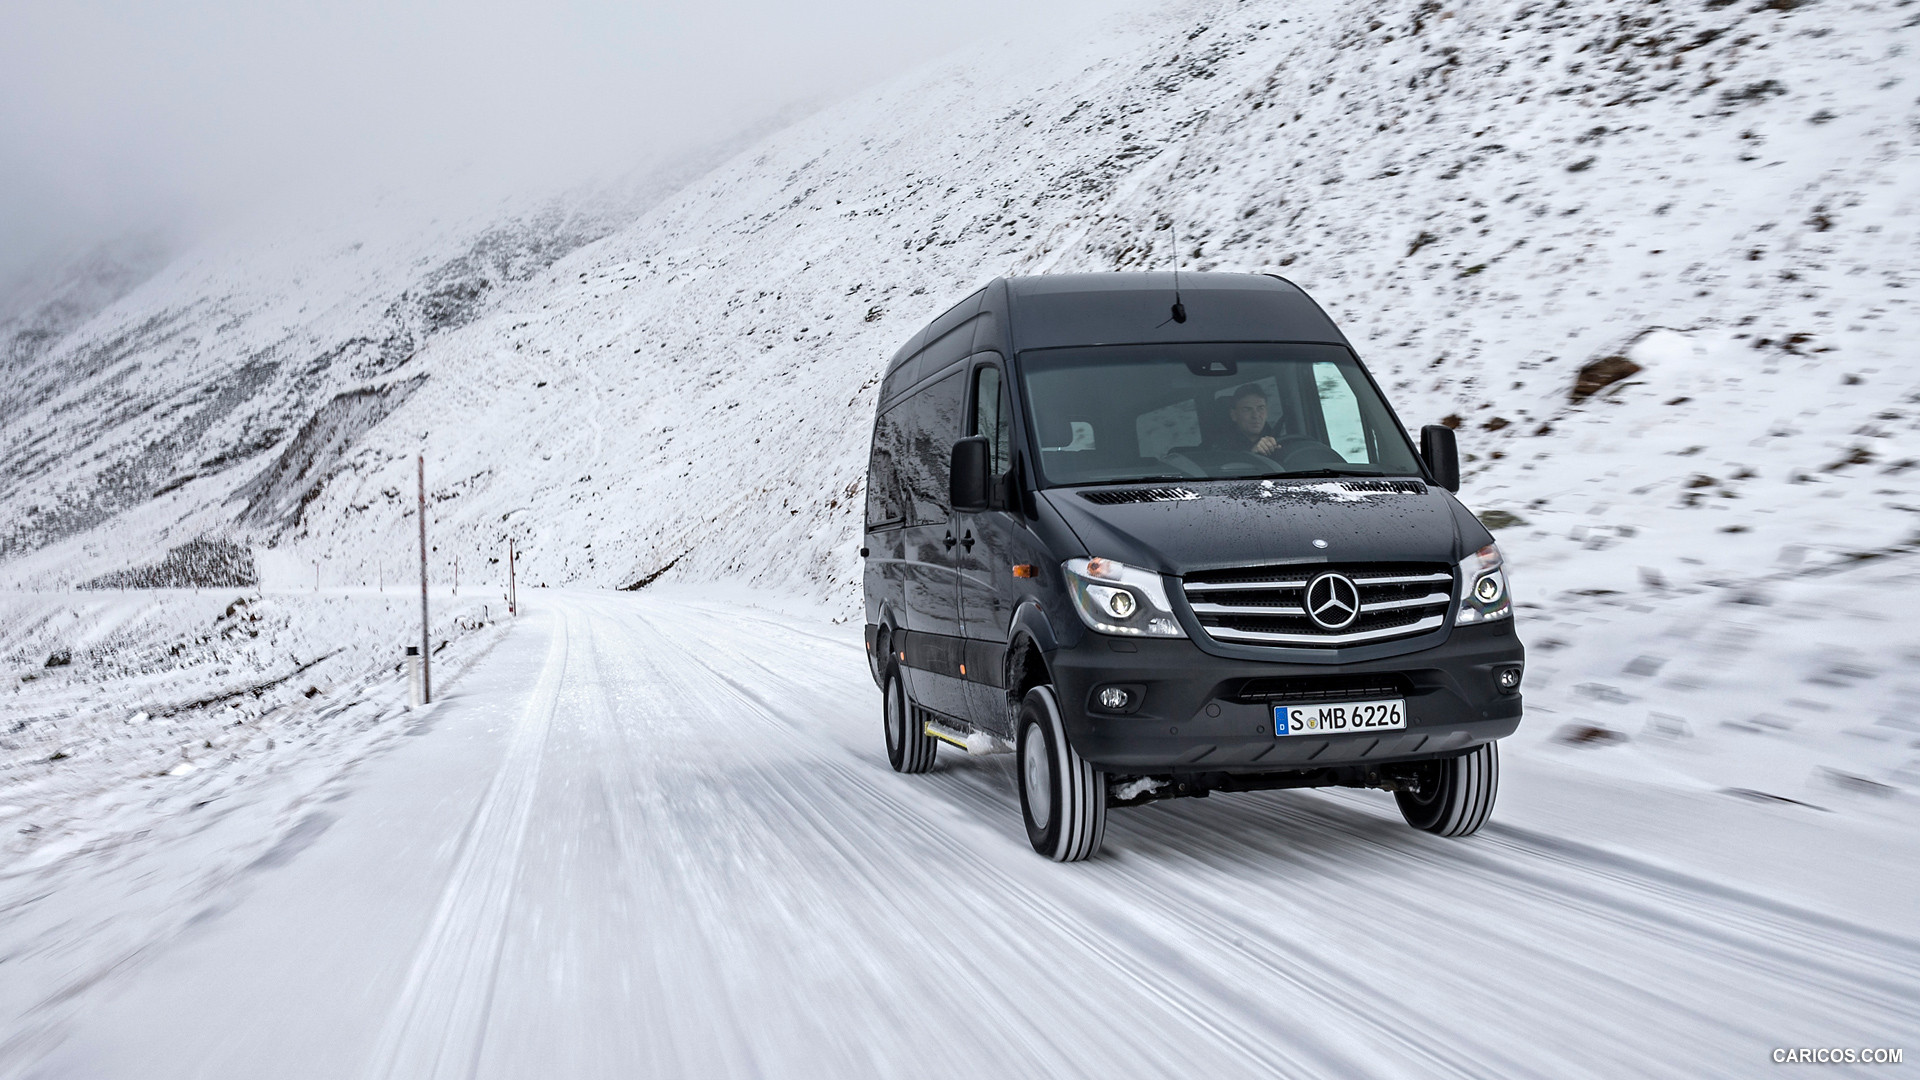 2015 Mercedes-Benz Sprinter 316 BlueTec 4X4 - In Snow - Front, #15 of 126